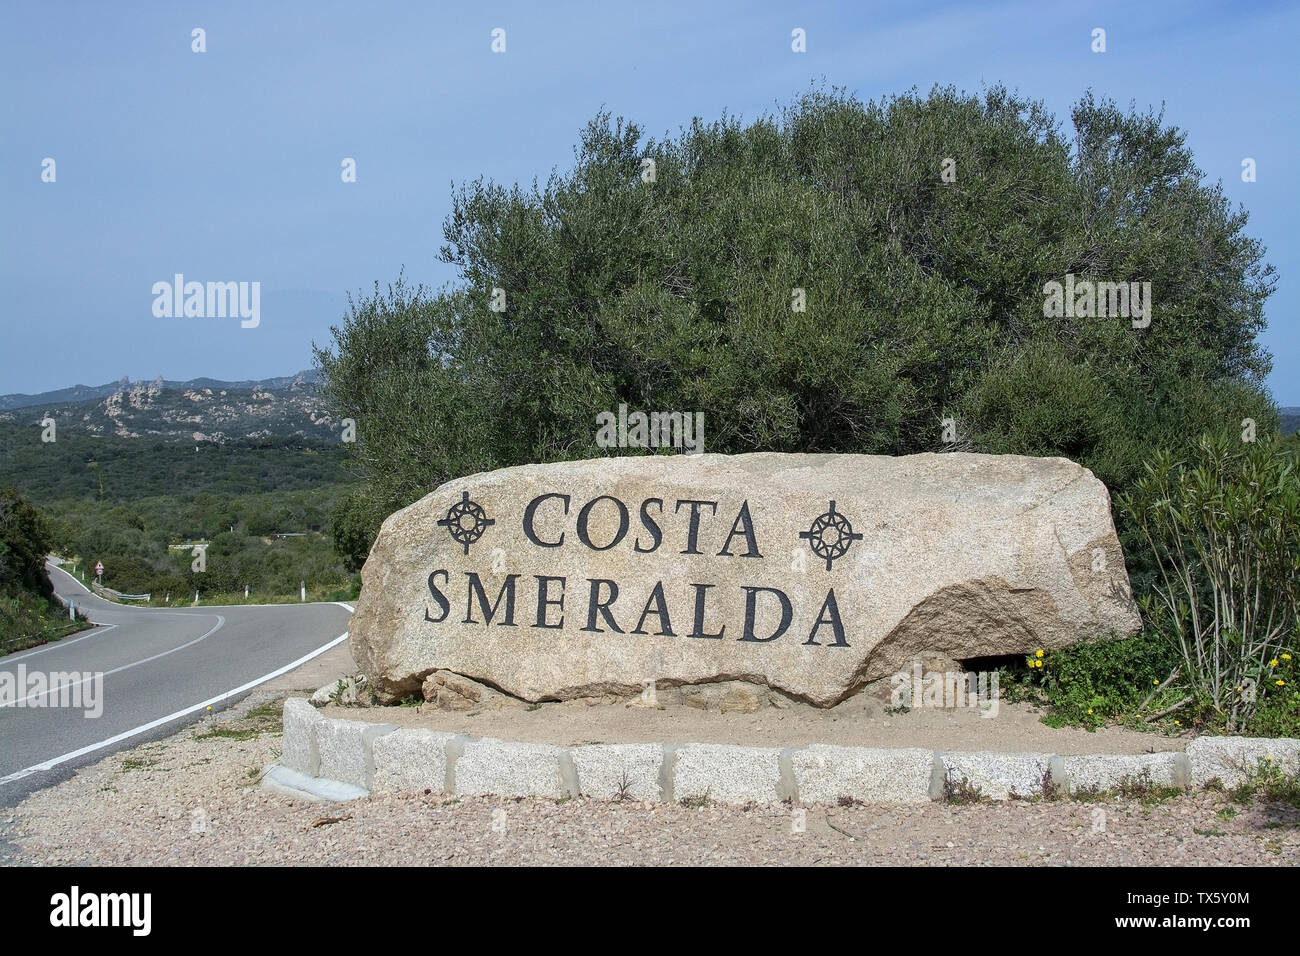 Roadside rock with text Costa Smeralda information sign in Sardinia, Italy. Stock Photo